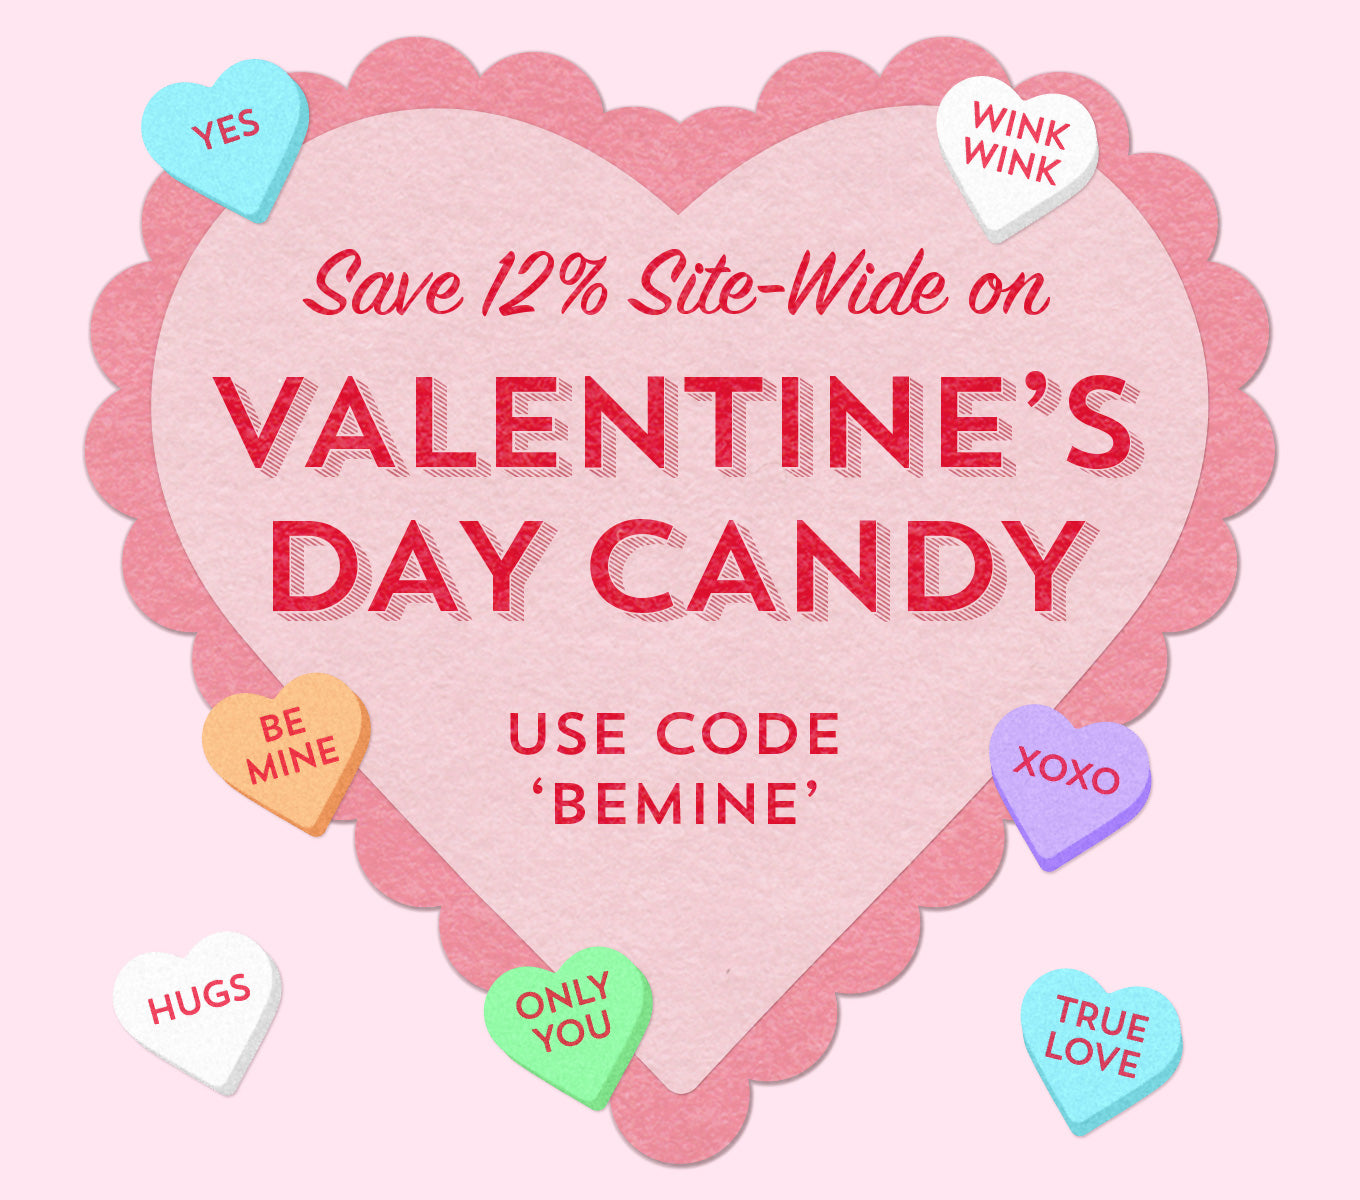 Valentine's Pink and White Mini Heart Marshmallows Bag - 2.1oz - Favorite  Day™